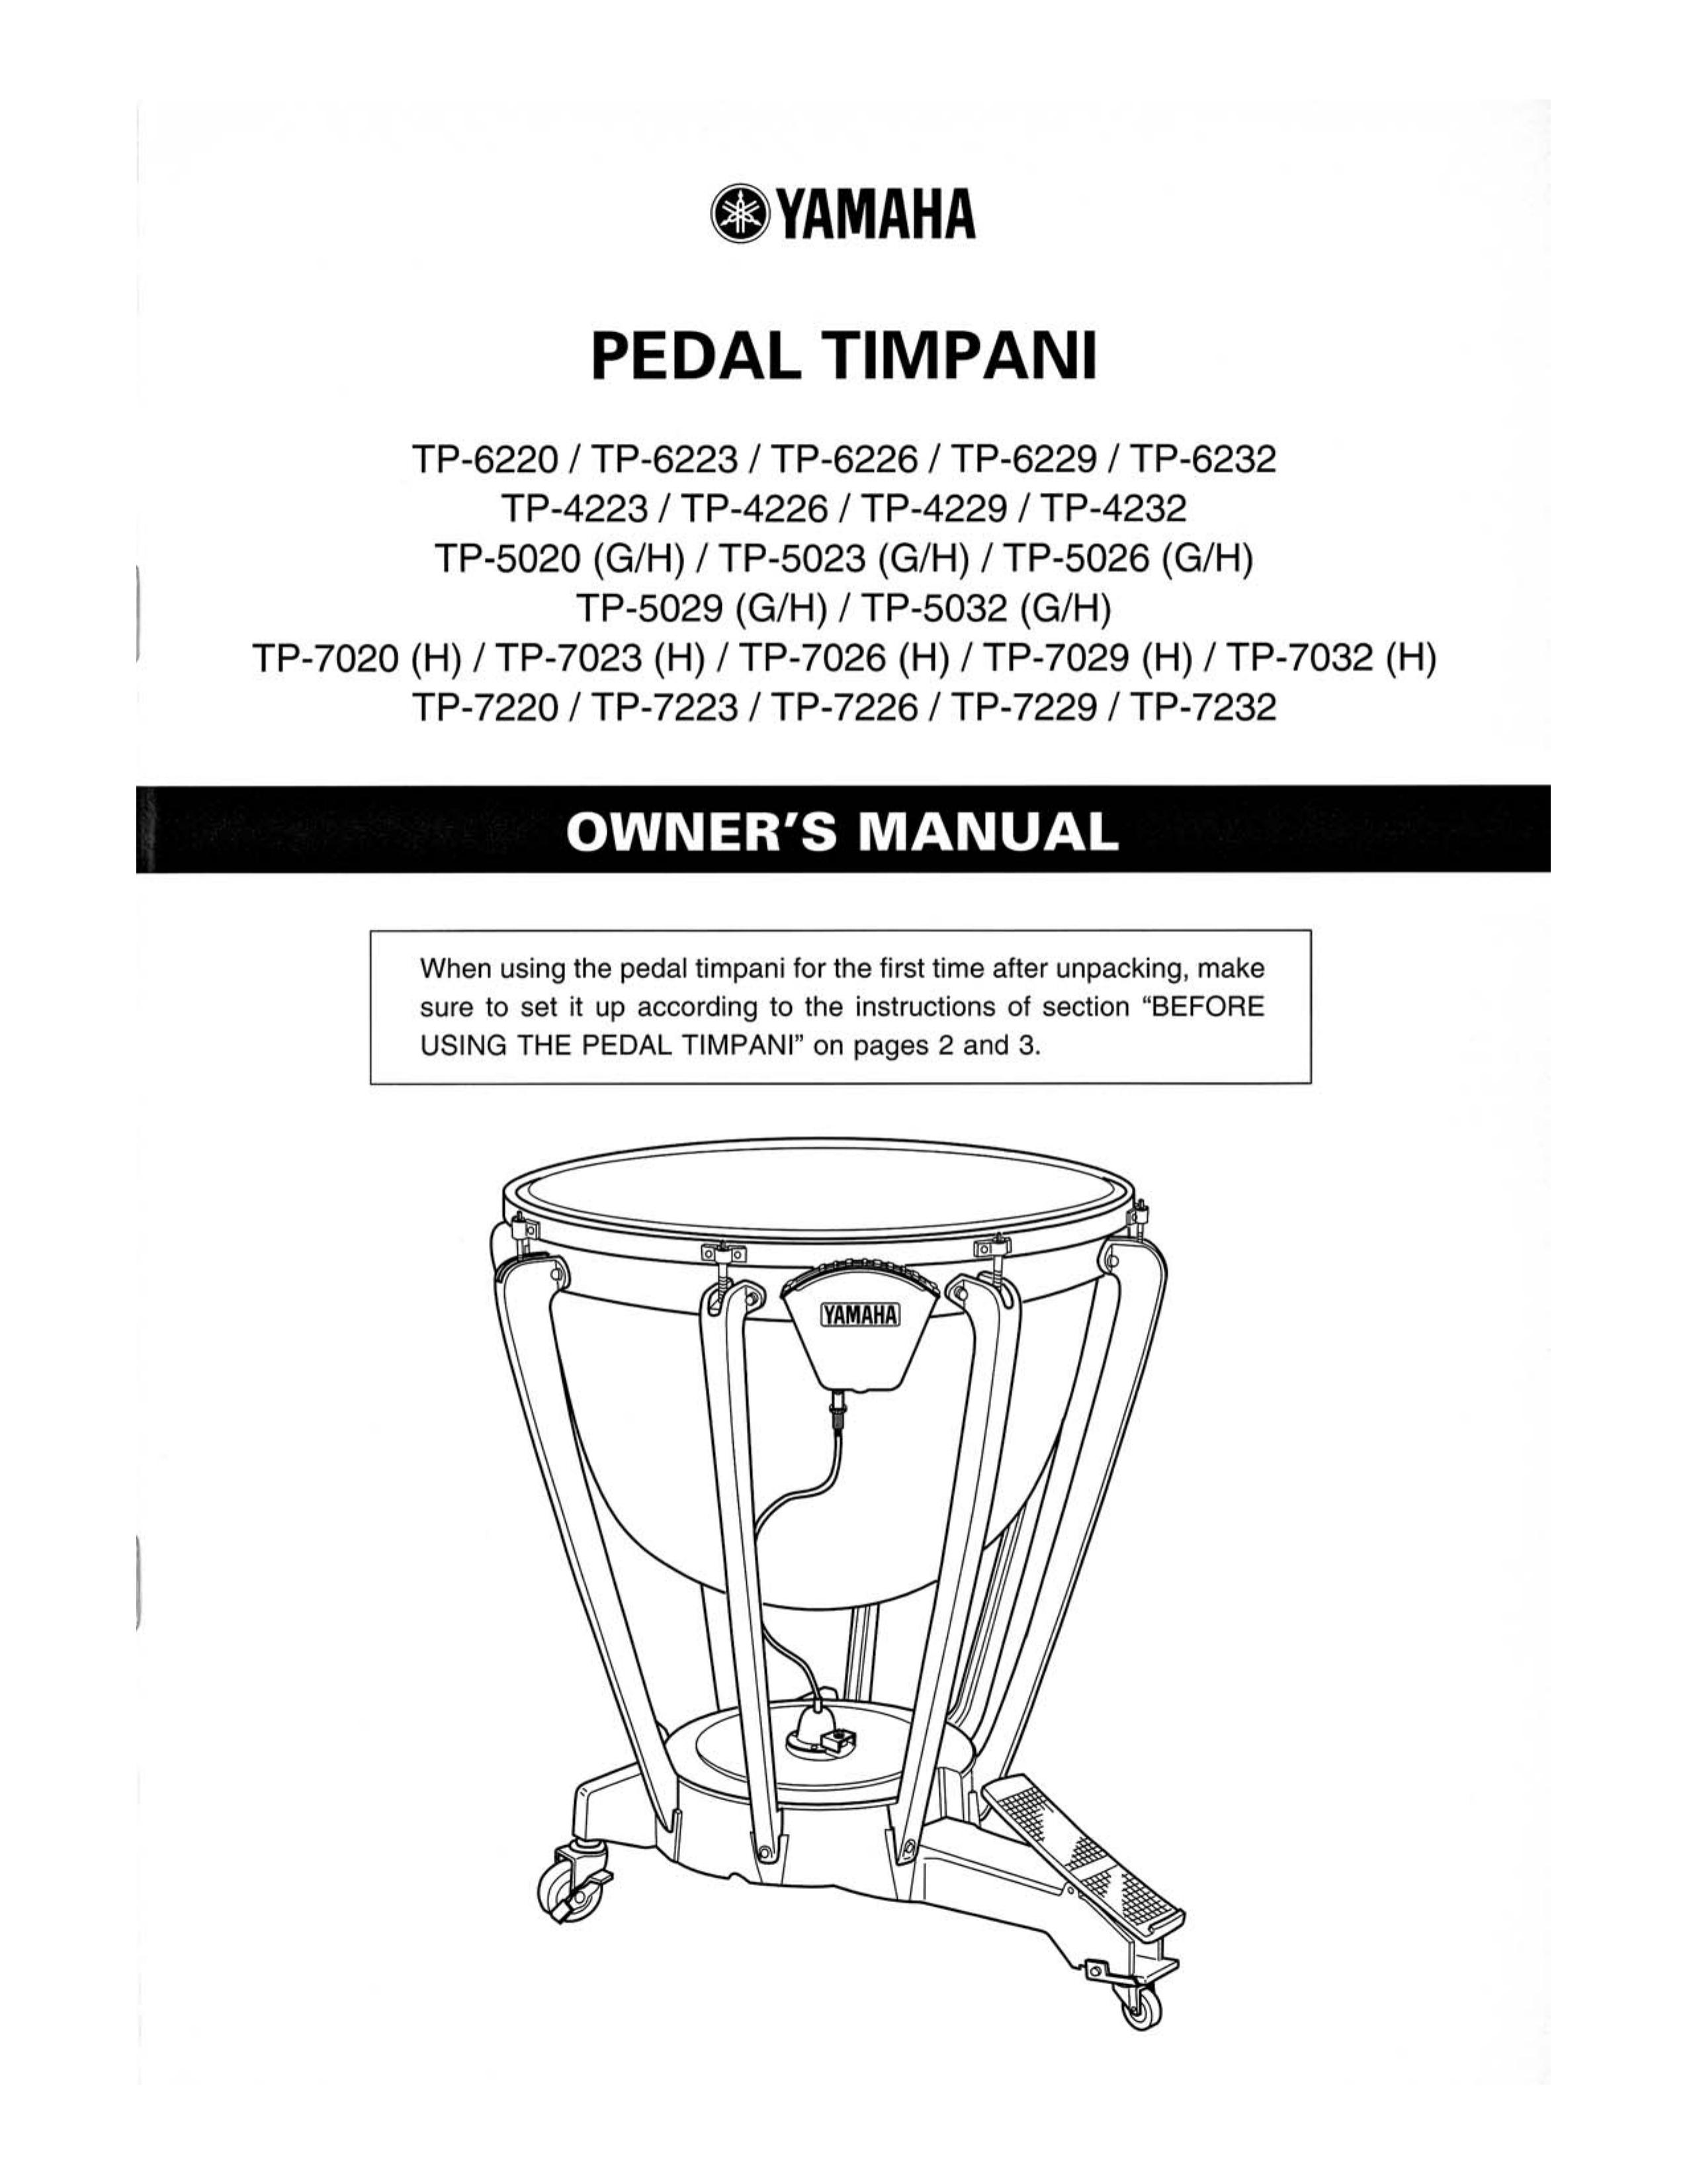 Yamaha TP-5023 Music Pedal User Manual